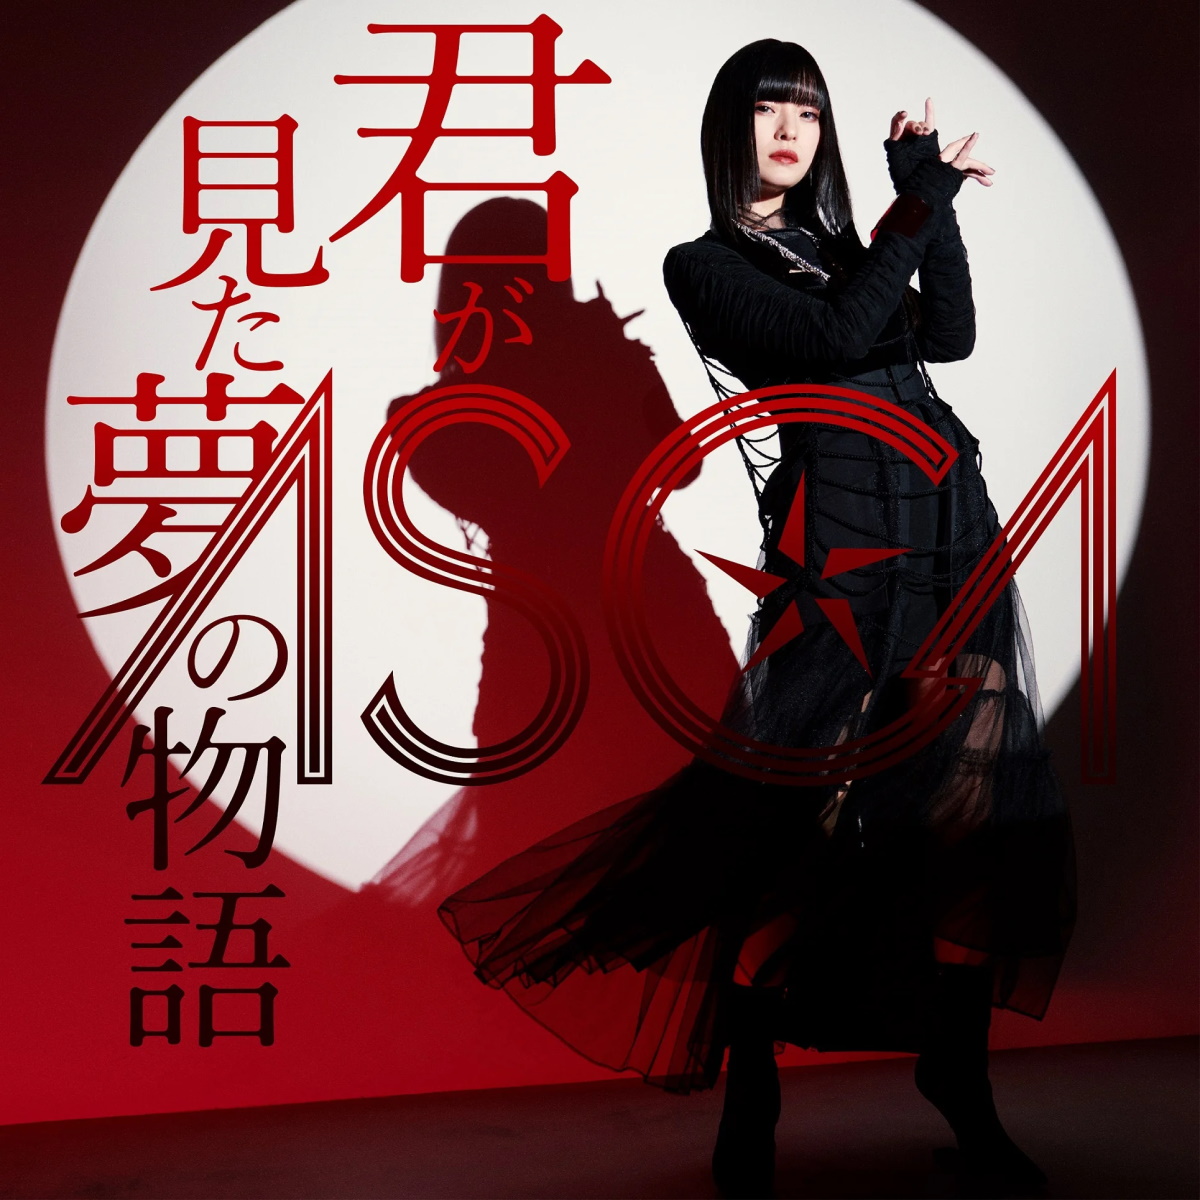 Cover for『ASCA - Kimi ga Mita Yume no Monogatari』from the release『Kimi ga Mita Yume no Monogatari』